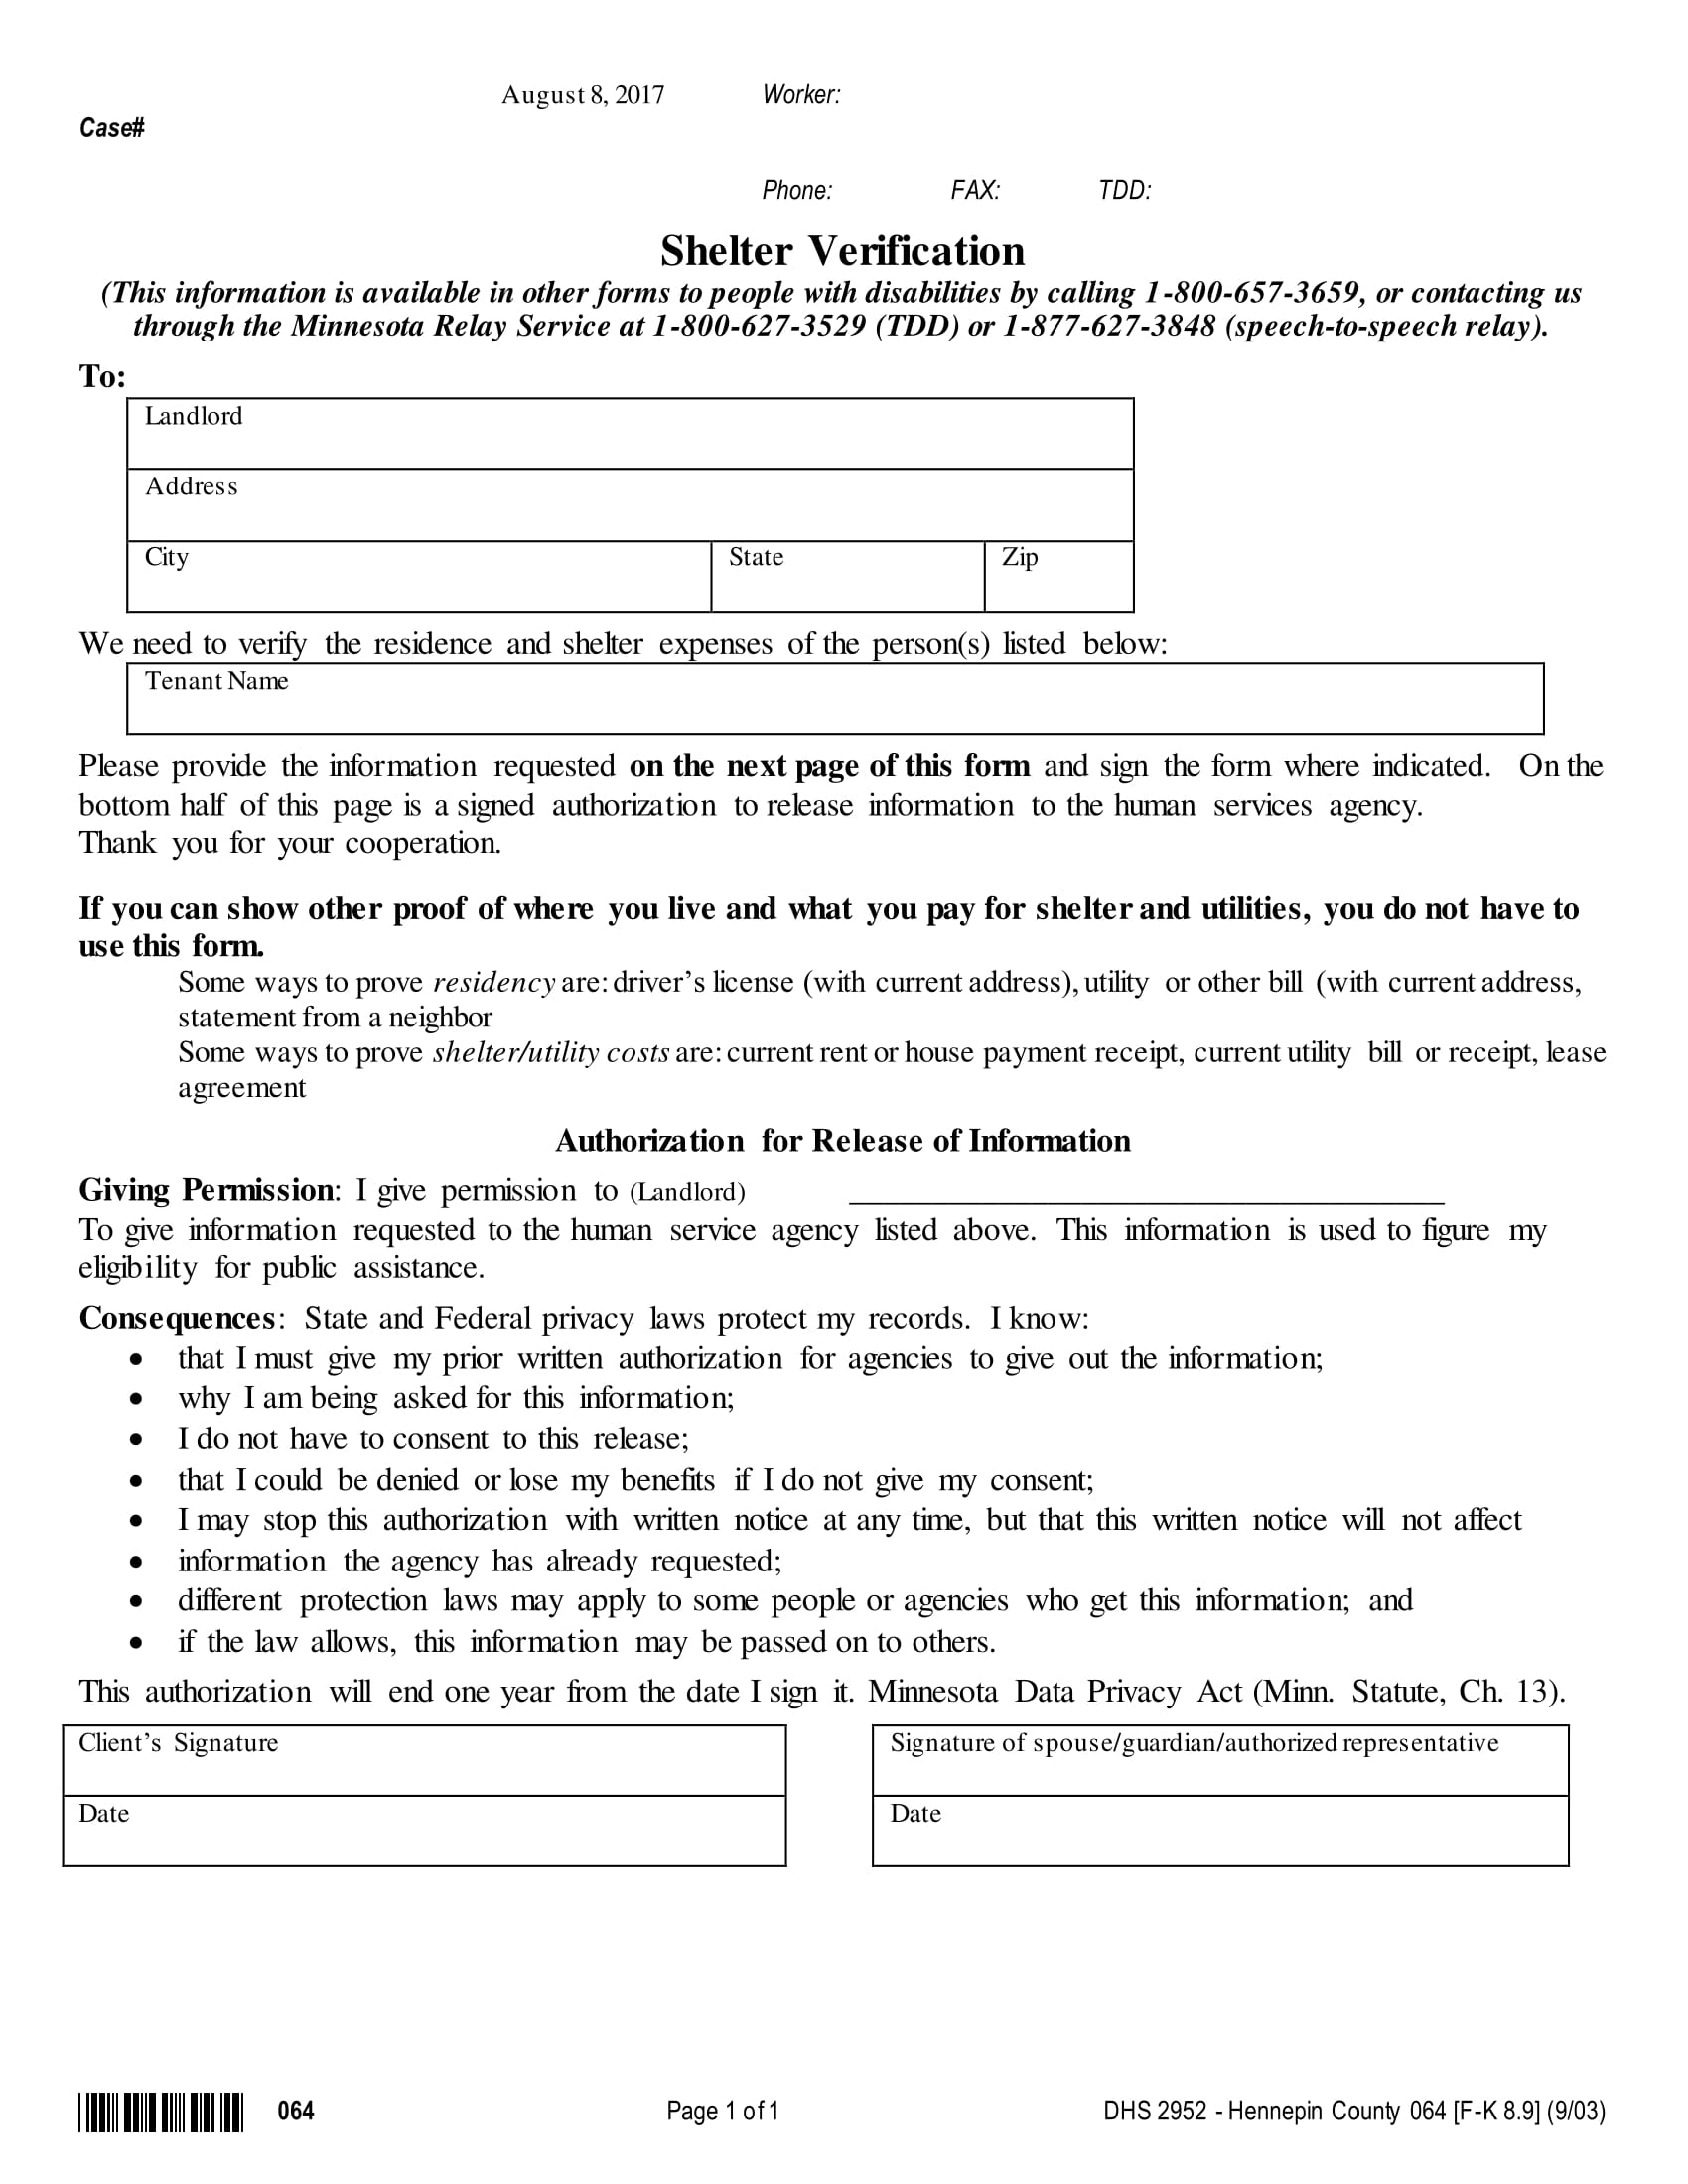 landlord shelter verification form 1